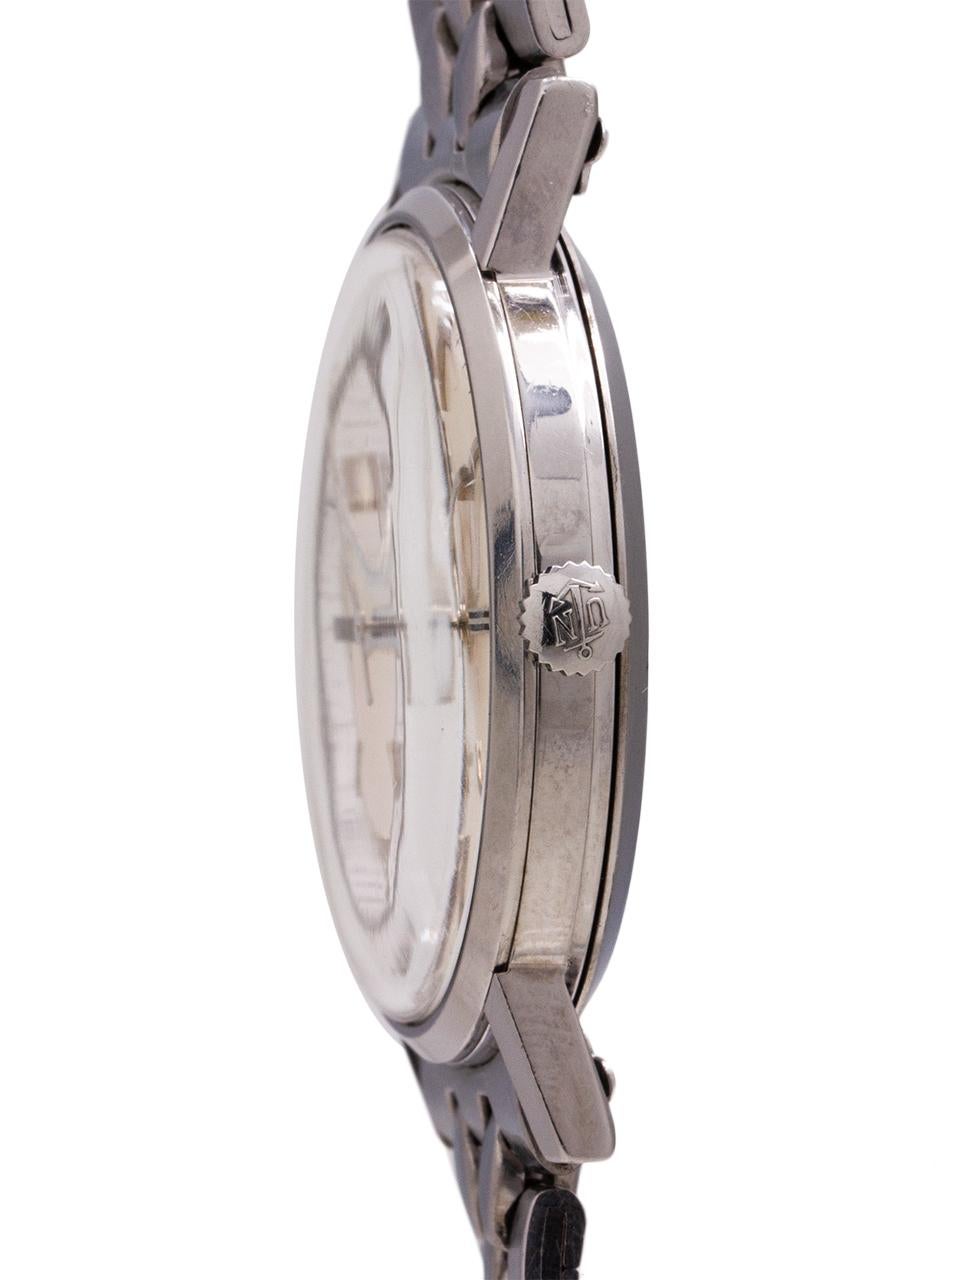 Men's Ulysse Nardin Stainless Steel Automatic wristwatch Ref 10528/1, circa 1960s